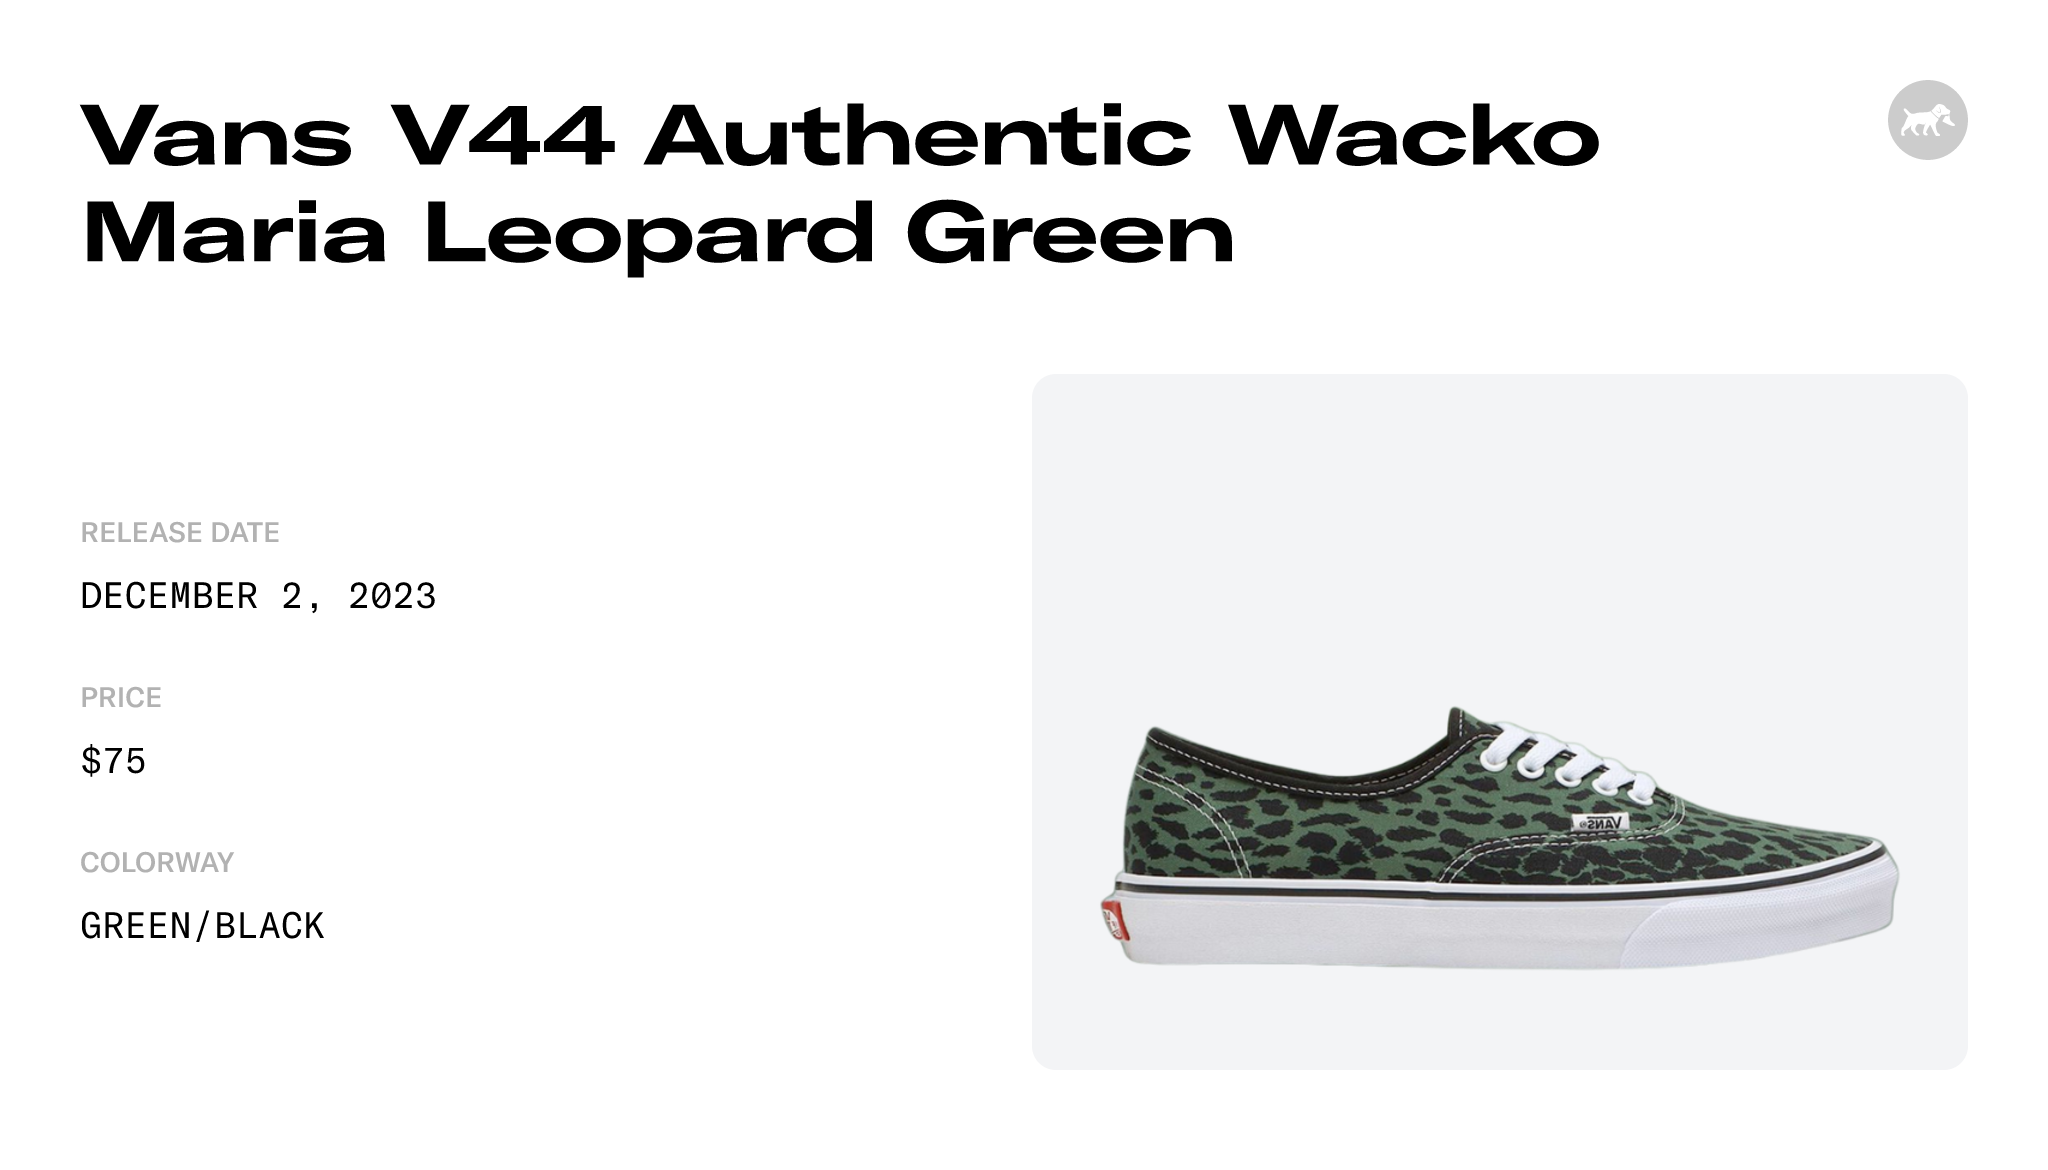 Vans V44 Authentic Wacko Maria Leopard Green Raffles and Release Date